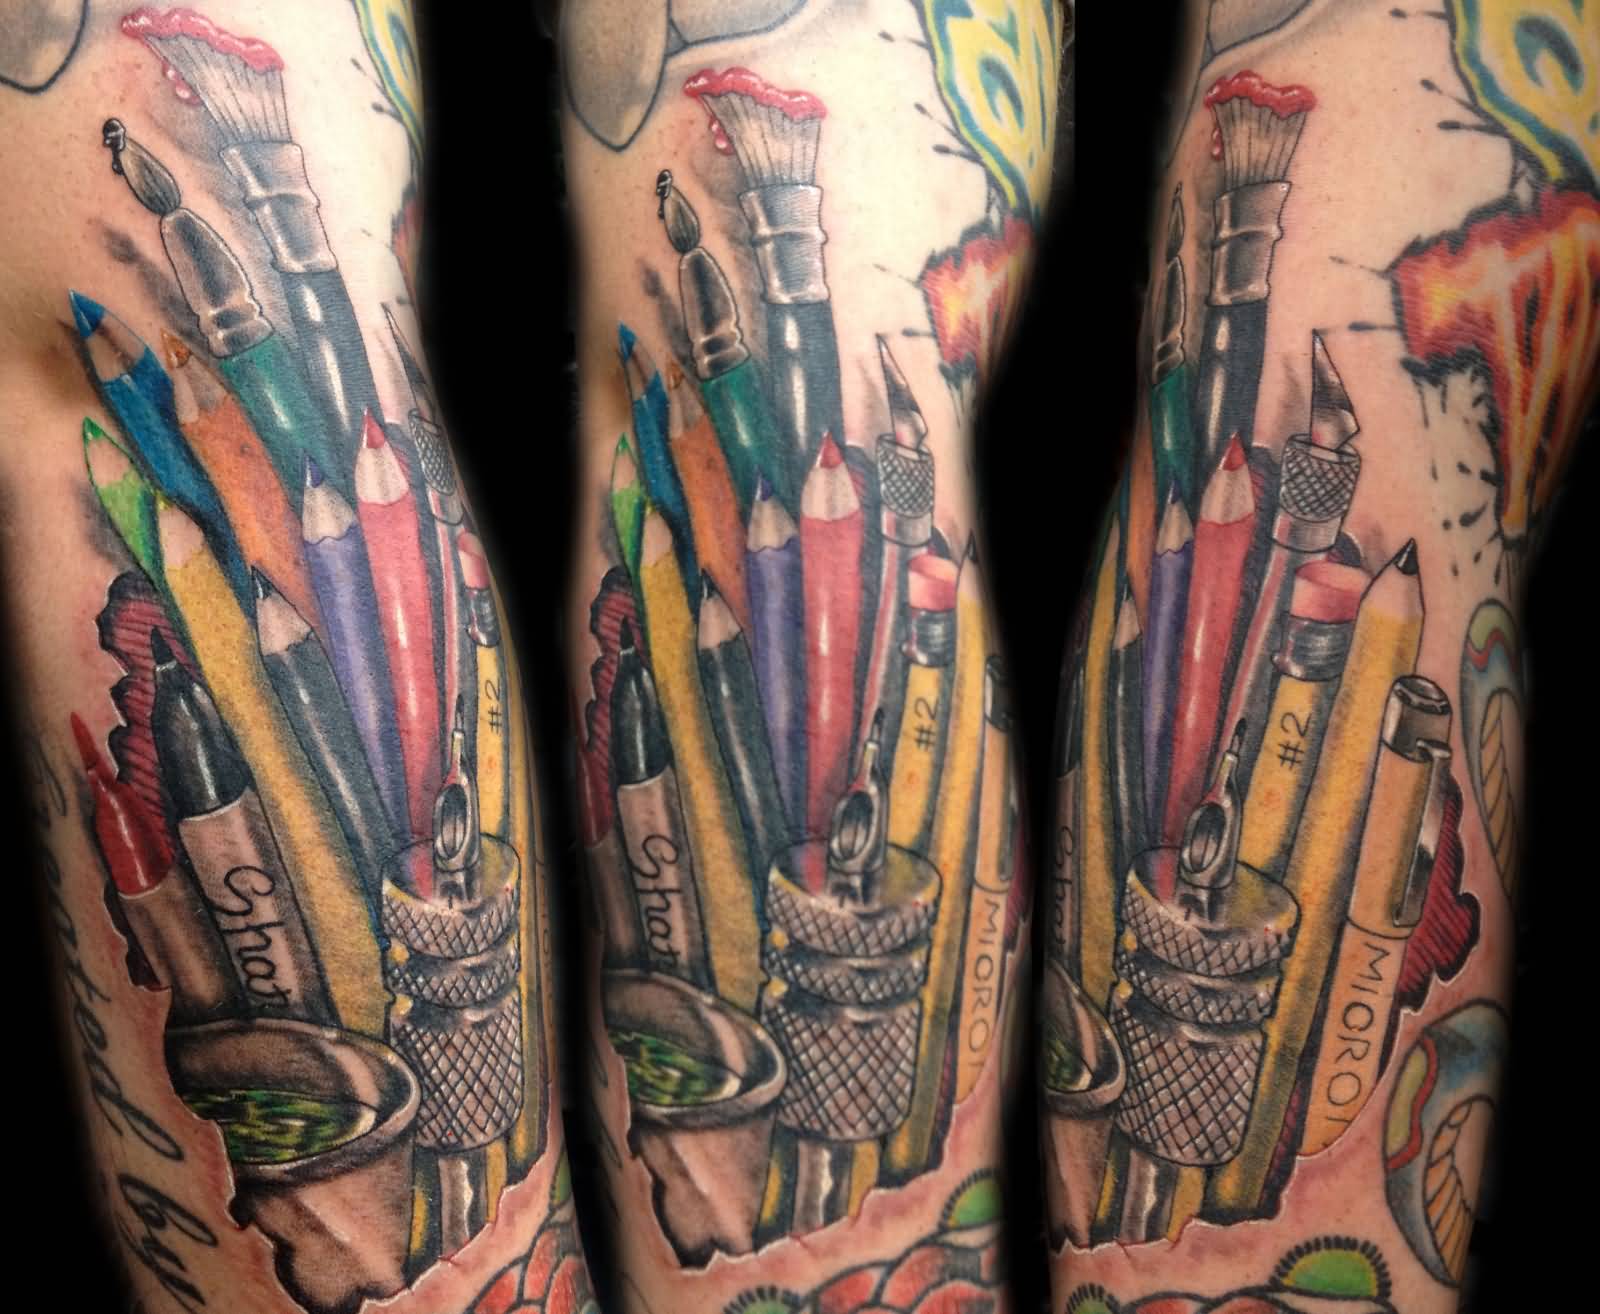 Artistic Brush And Pencils Tattoo On Sleeve